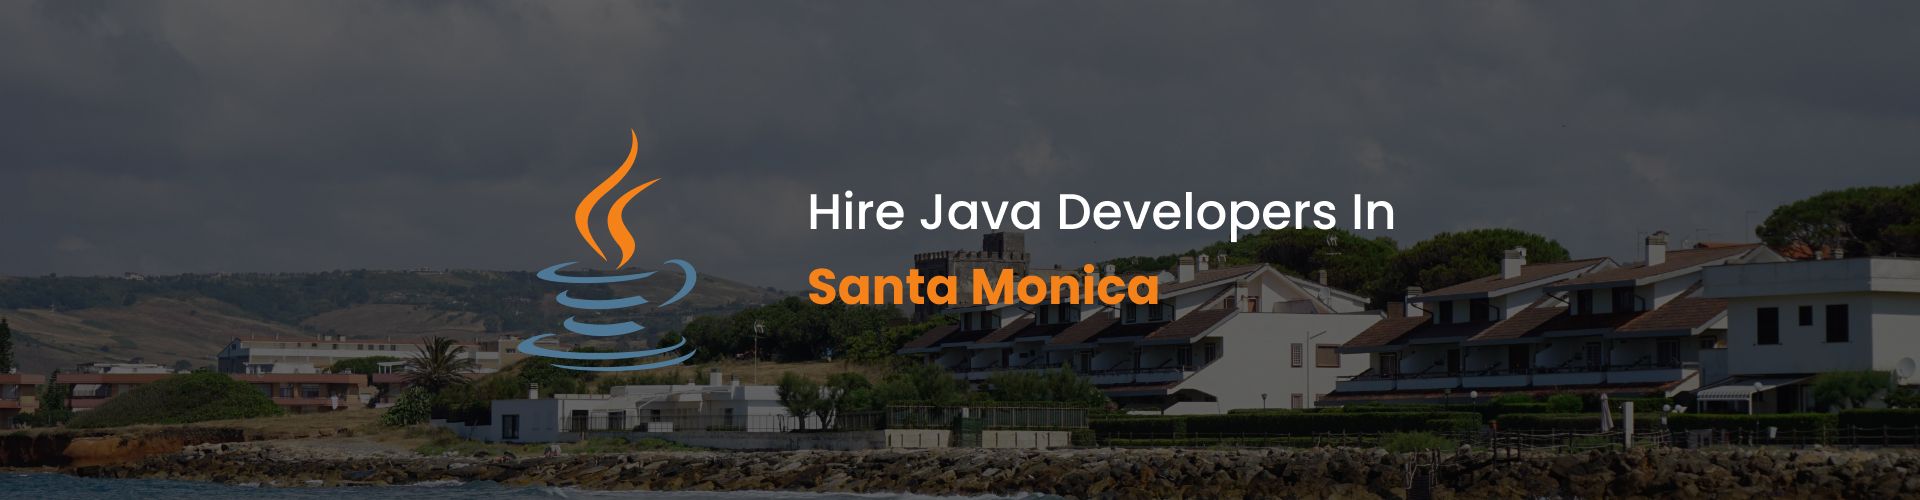 hire java developers in santa monica